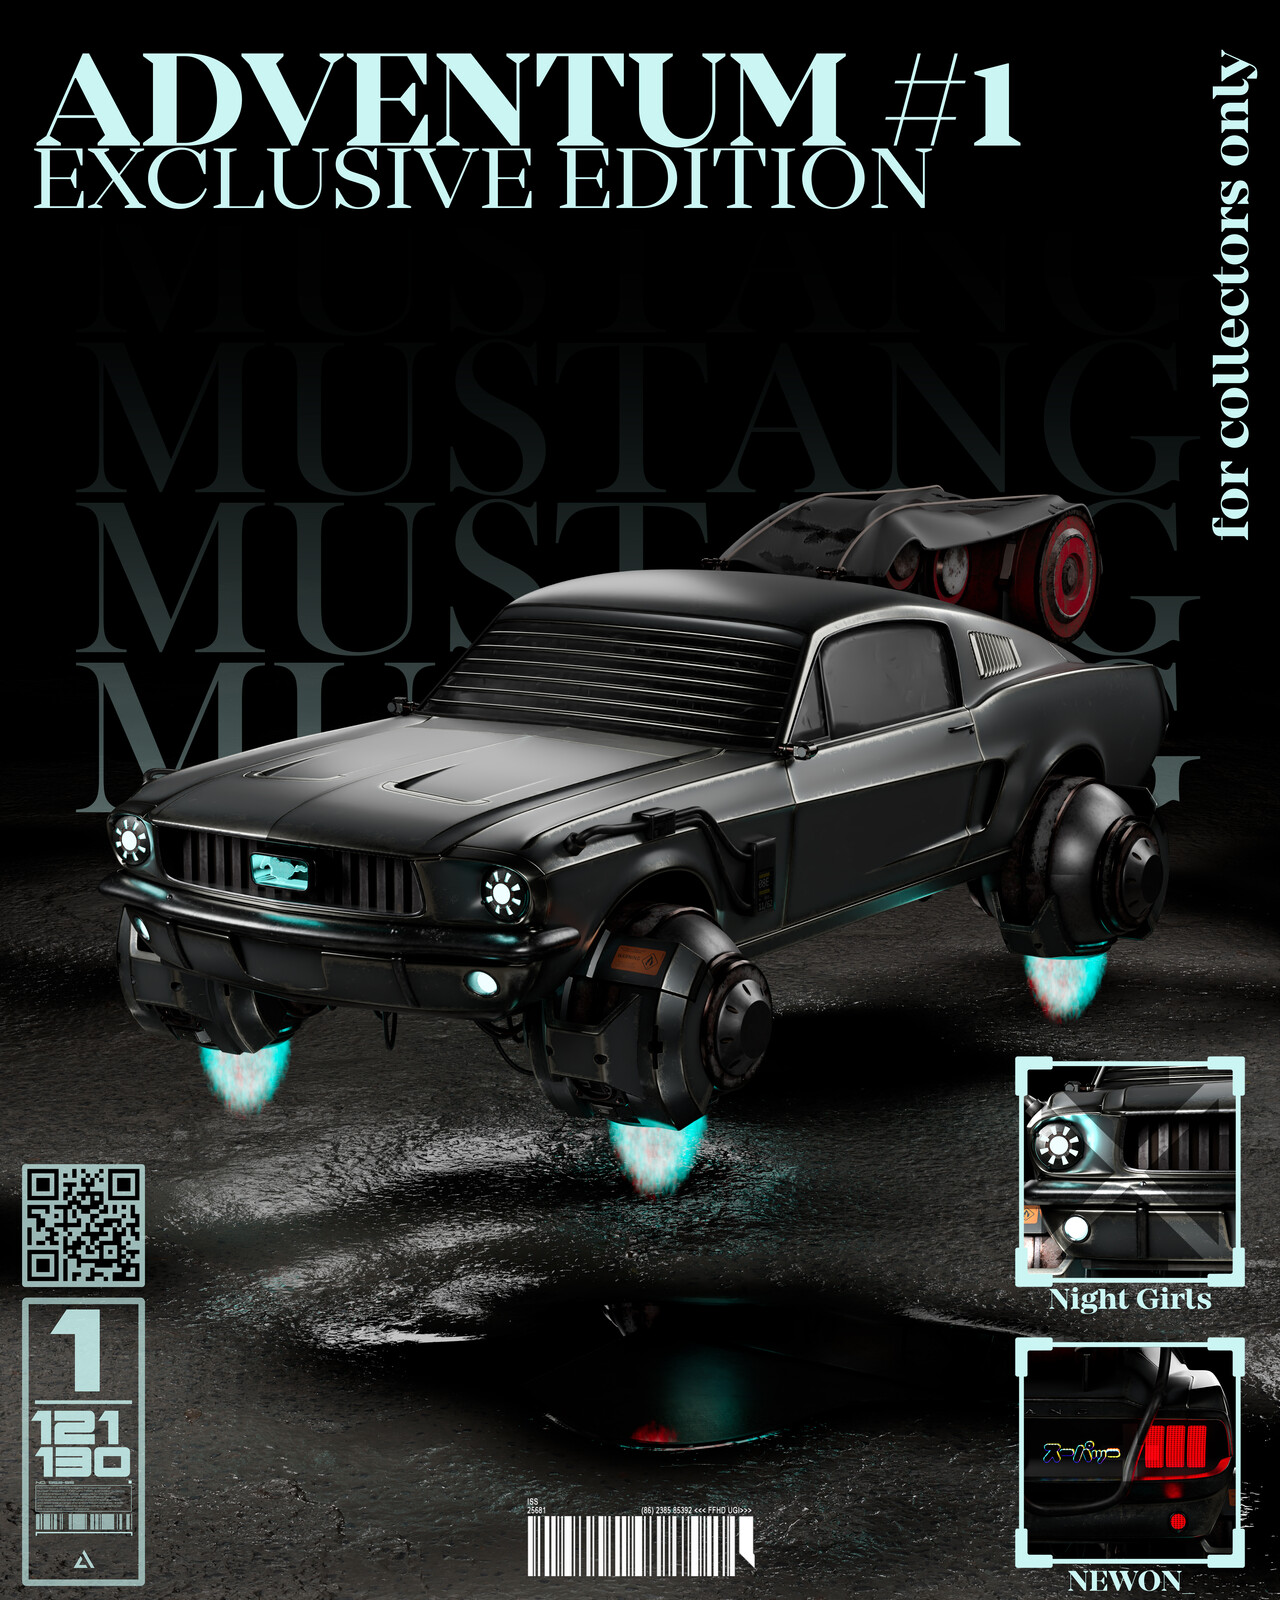 Cyberpunk Mustang Mod - Adventum Exclusive Edition #1